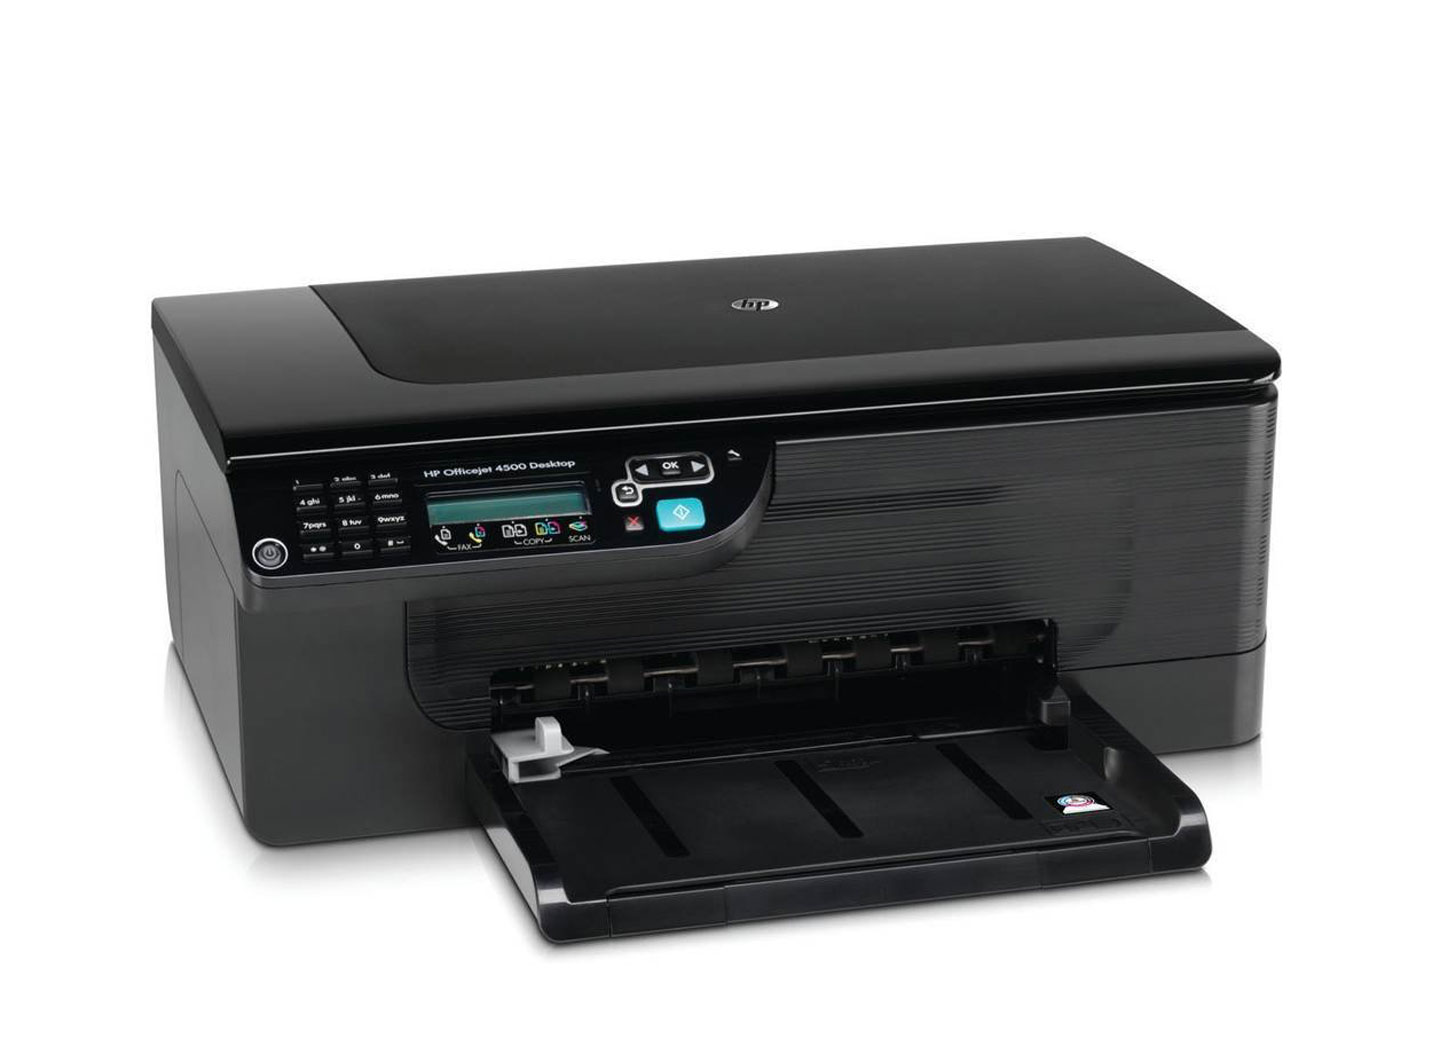 Download Printer Drivers Hp Officejet 4500 - loadfoundation